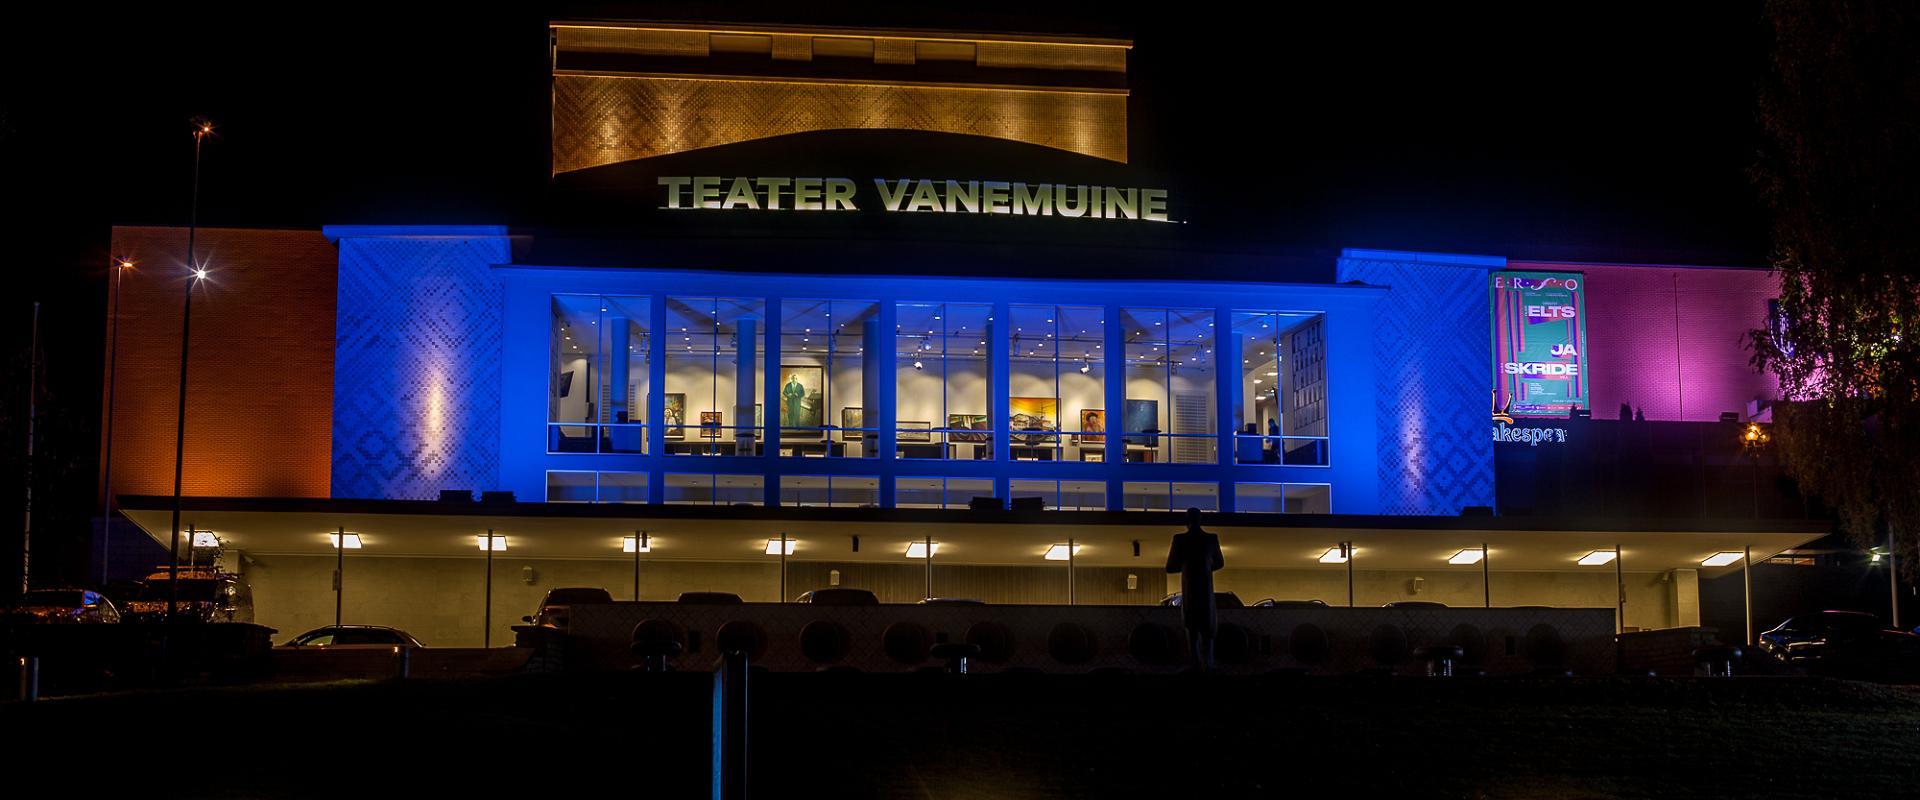 Teater Vanemuine